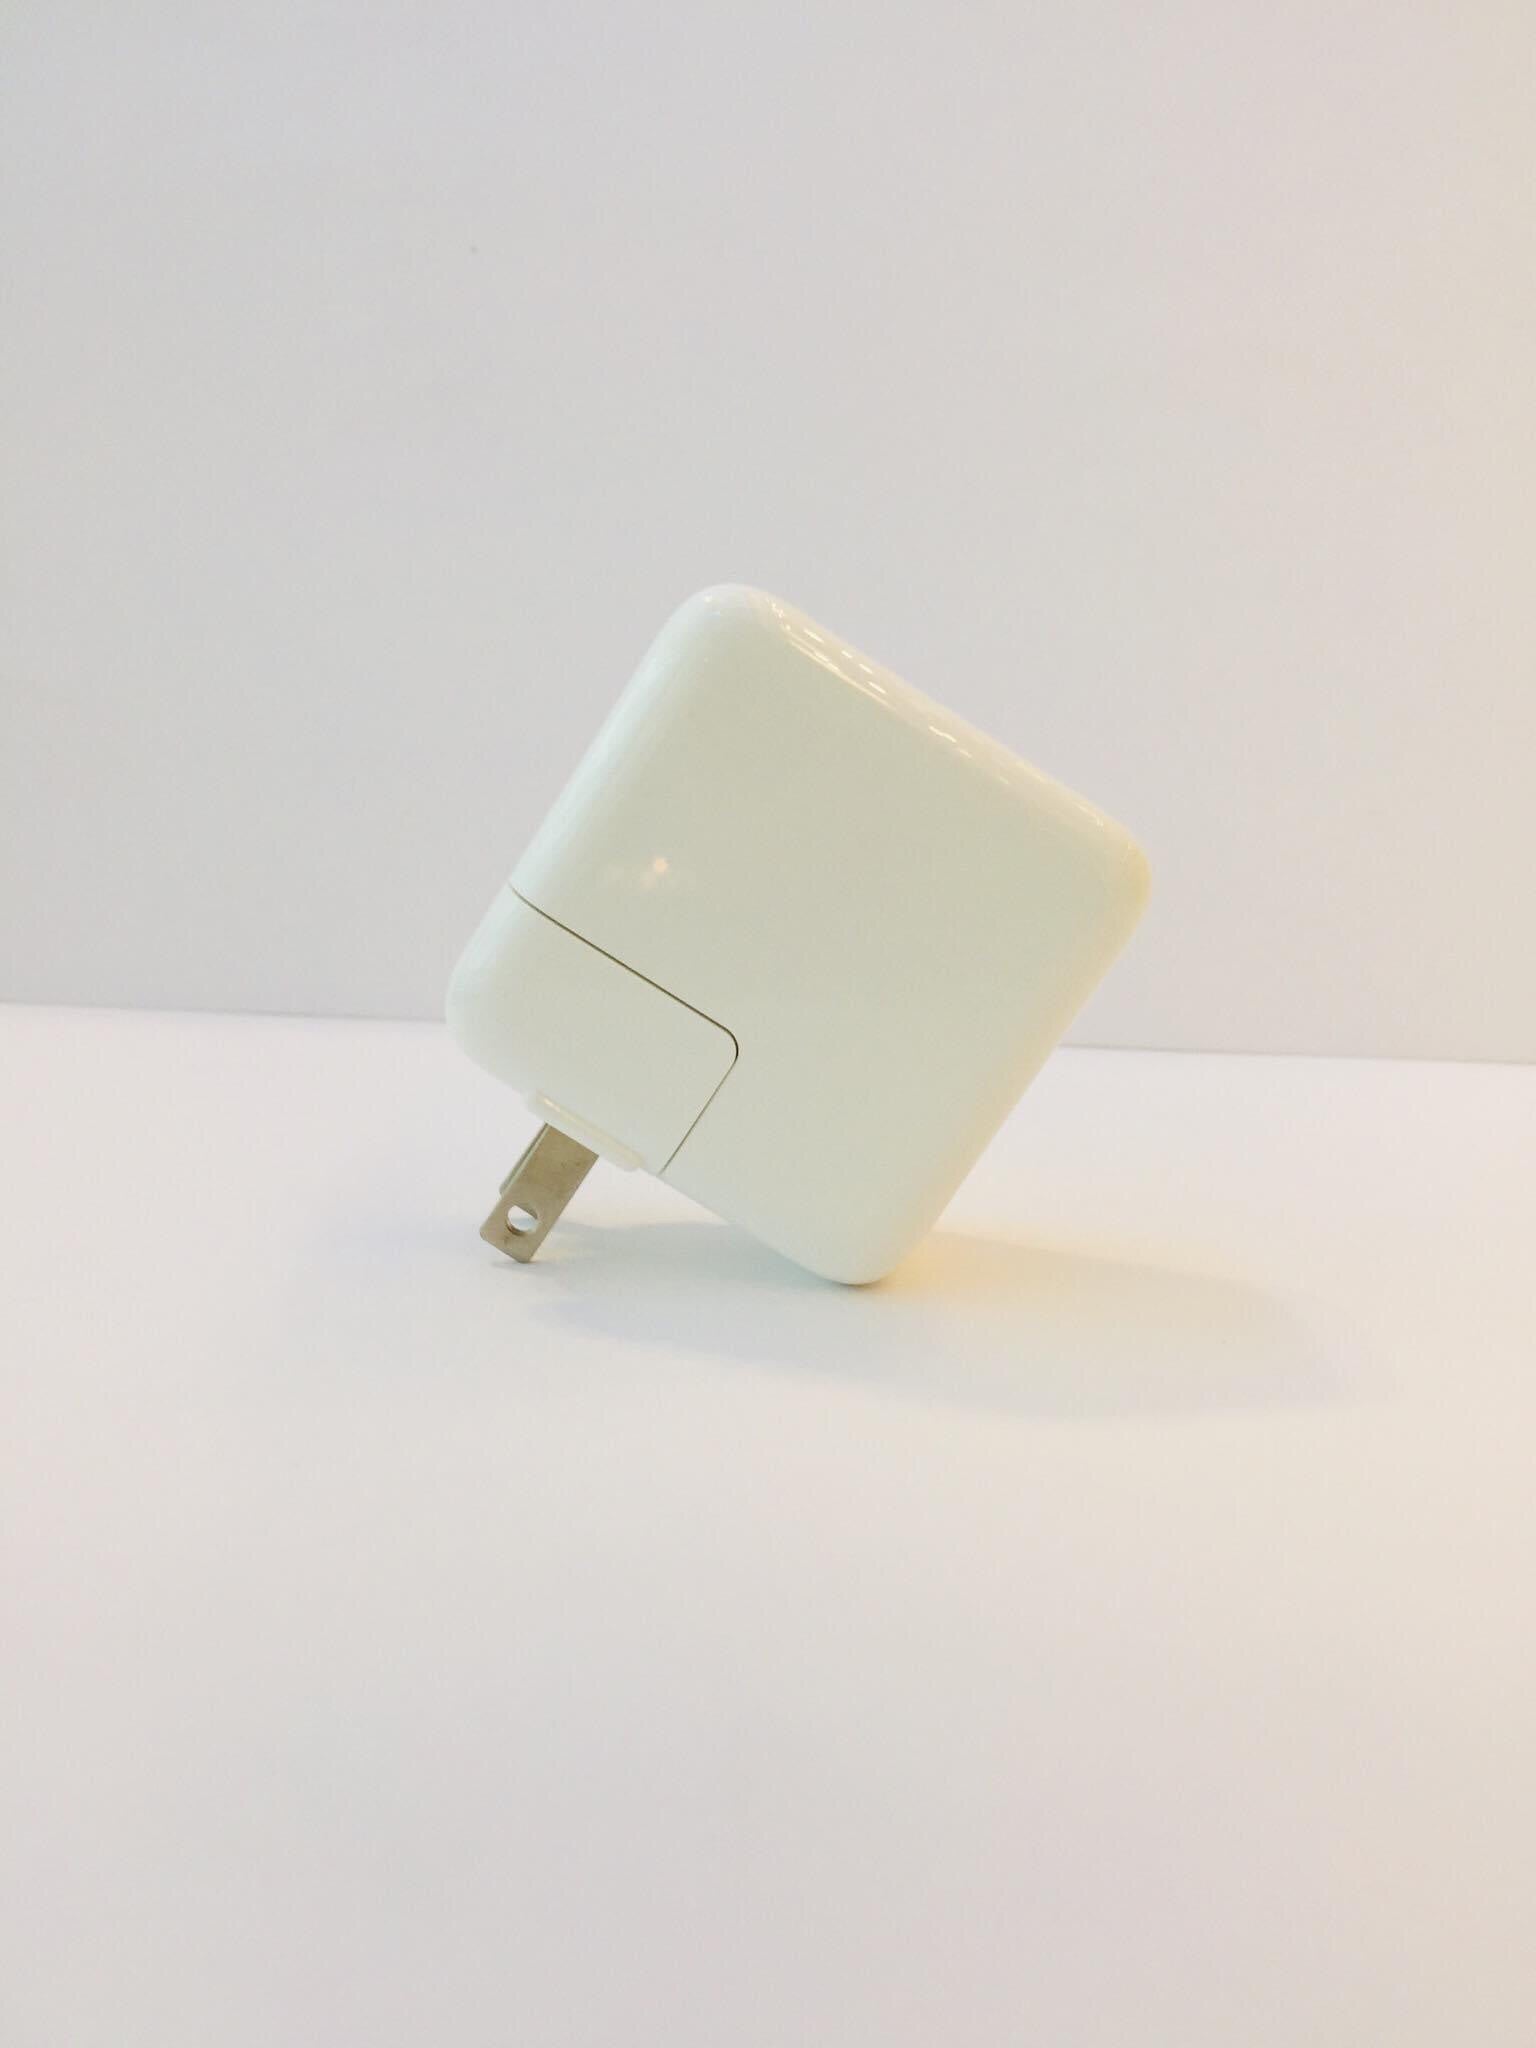 i1108 Apple Original USB-C Power Adaptor (used)